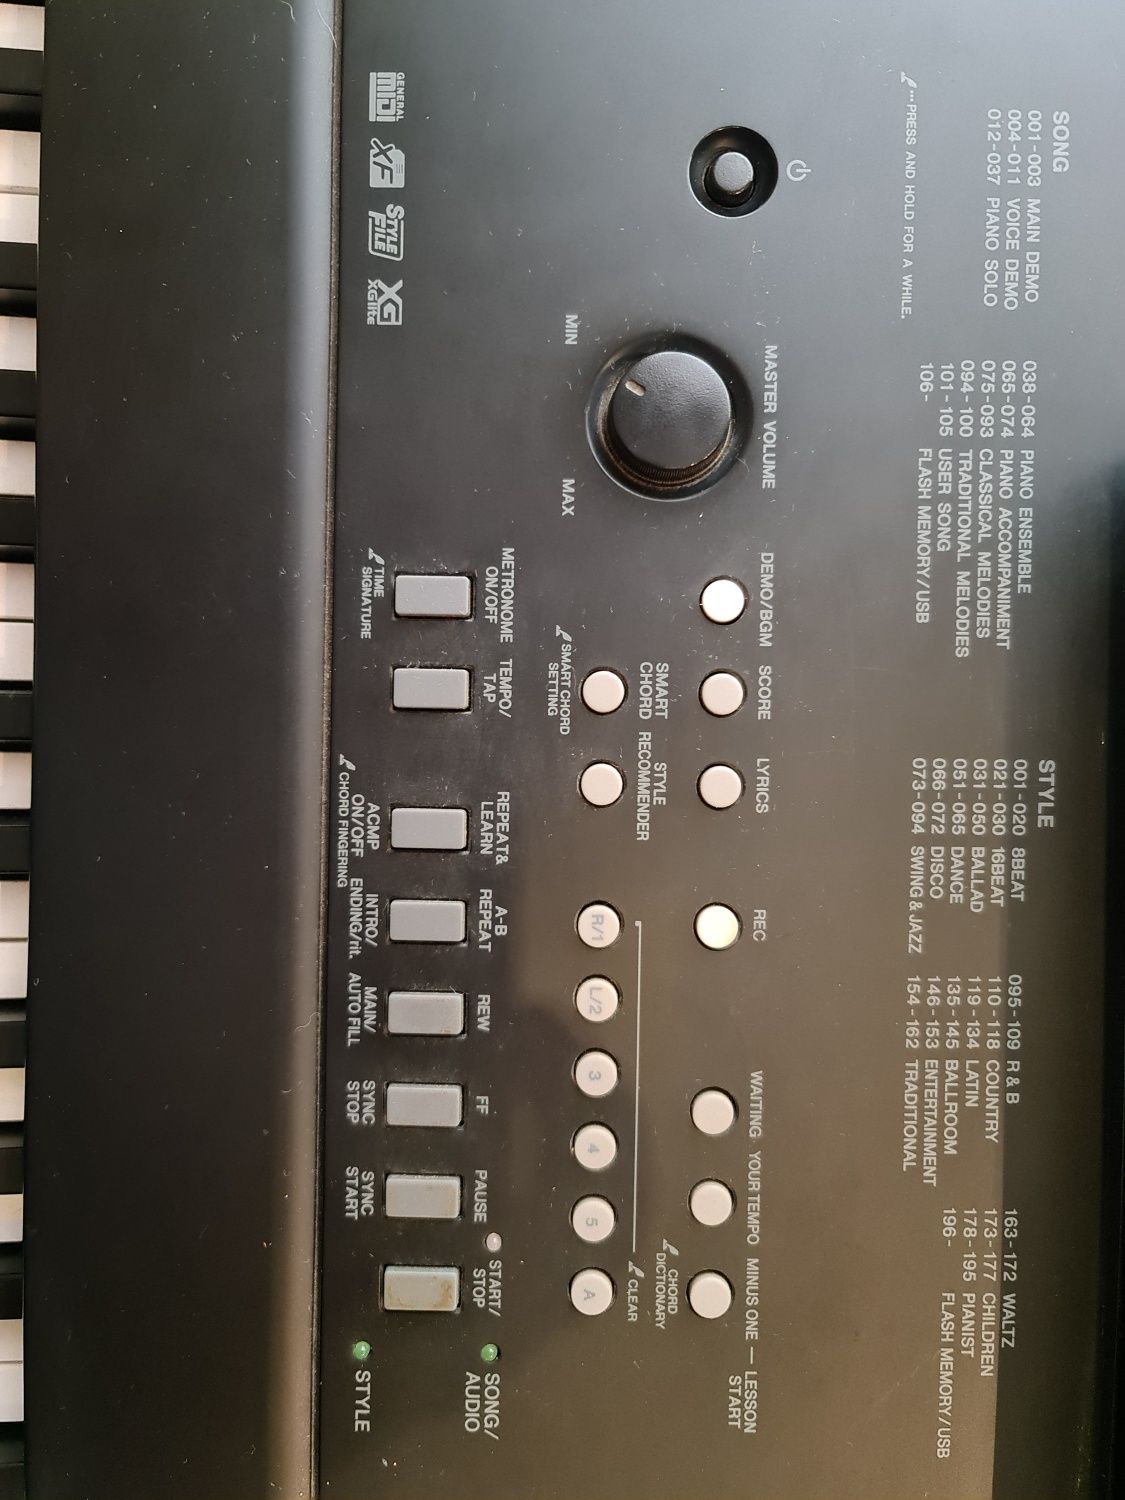 Piano Digital Yamaha DGX-650B